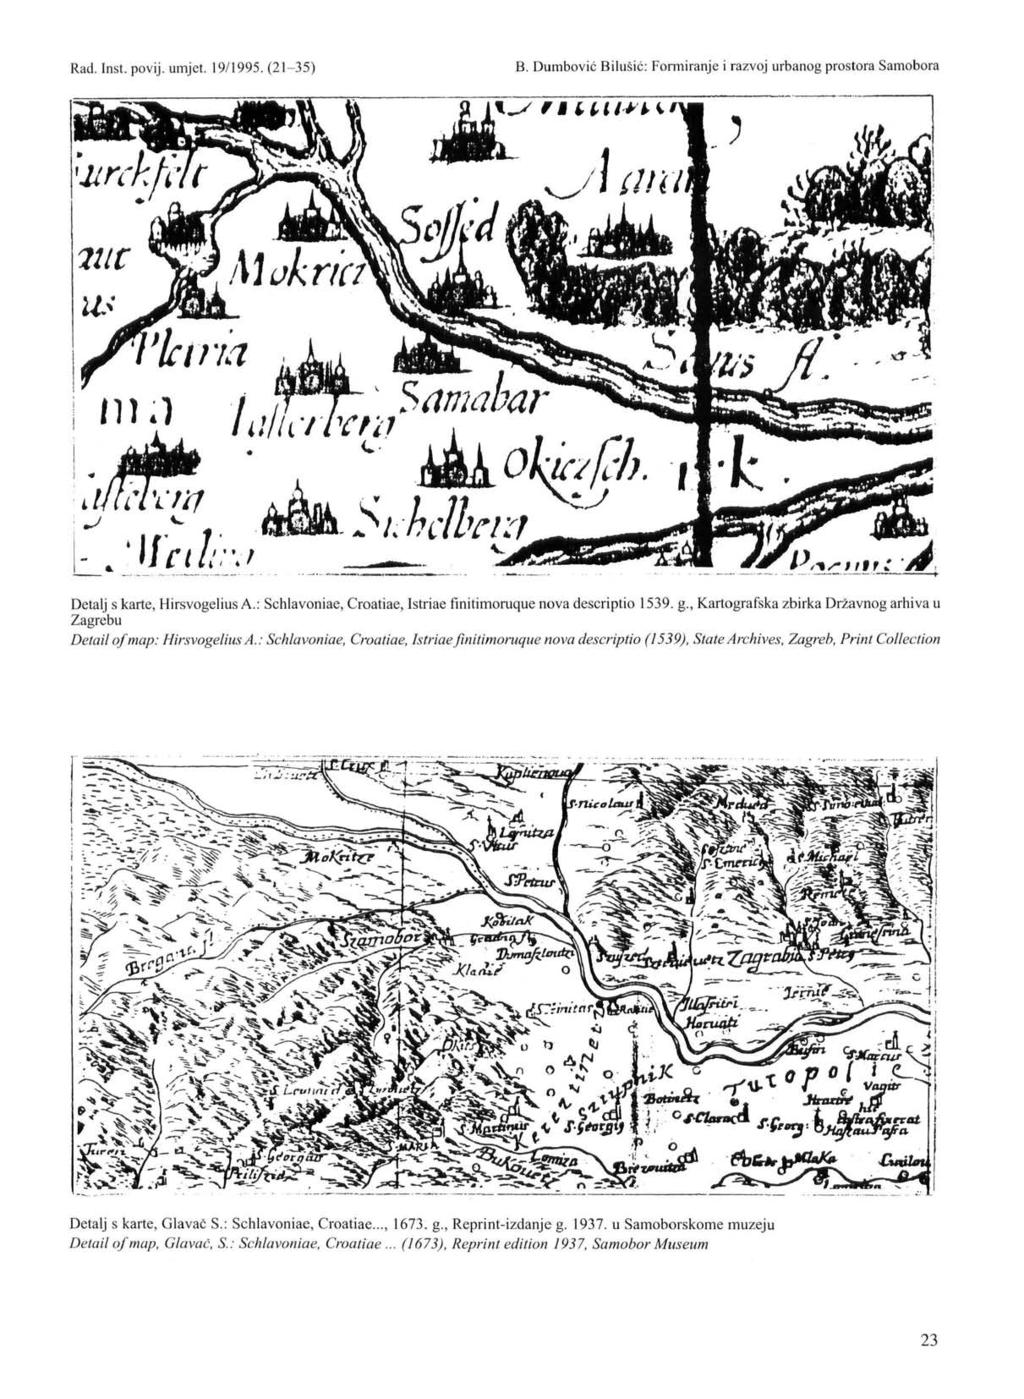 Detalj s karte, Hirsvogelius A.: Schlavoniae, Croatiae, Istriae finitimoruque nova descriptio 1539. g., Kartografska zbirka Državnog arhiva u Zagrebu Detail of map: Hirsvogelius A.